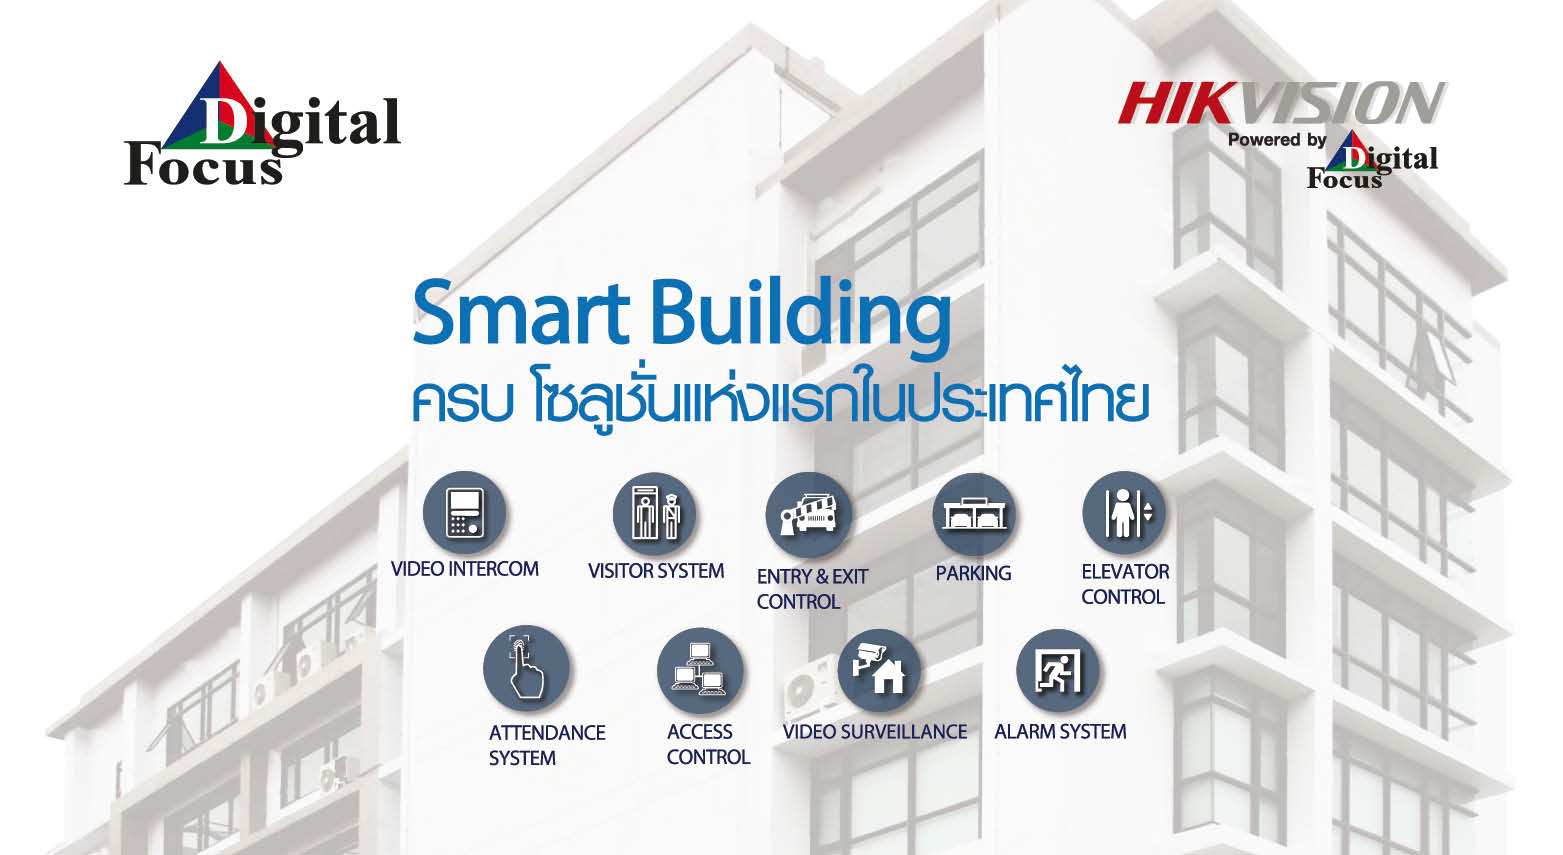 Digital Focus Smart Buiding ครบโซลูชั่นแห่งแรกในประเทศไทย